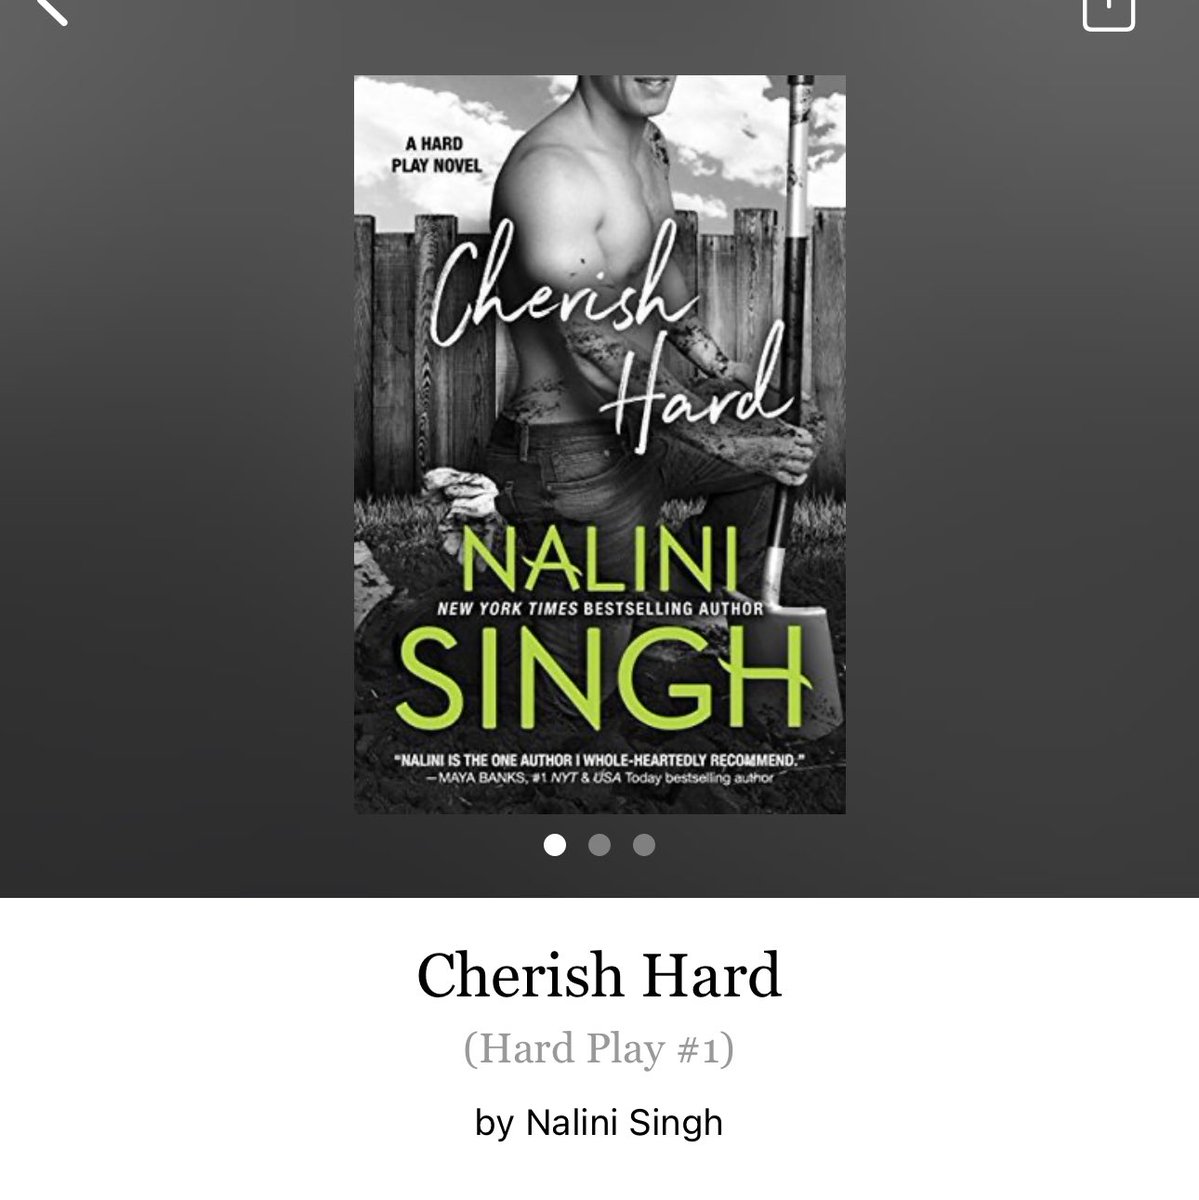 Cherish Hard by Nalini Singh 

#CherishHard by #NaliniSingh #6213 #40chapters #374pages #412of400 #Series #Book1of4 #Audiobook #49for13 #IsaAndSailor #10houraudiobook #HardPlaySeries #april2024 #clearingoffreadingshelves #whatsnext #readitquick